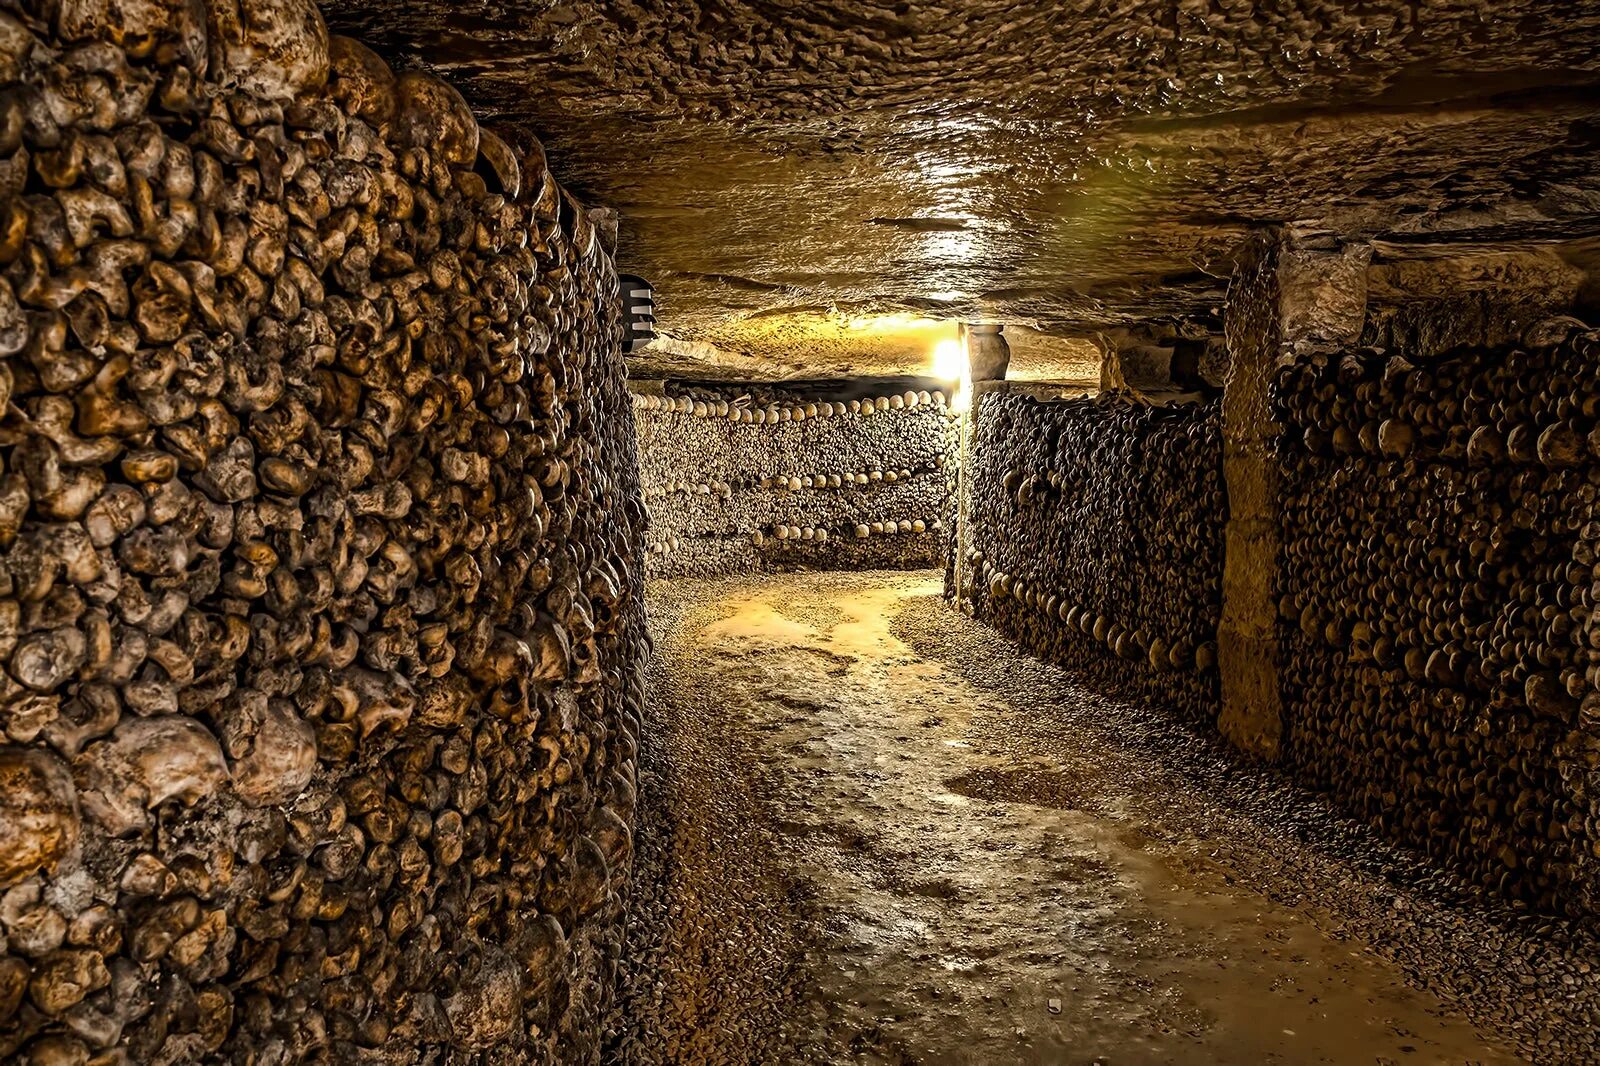 The catacombs of solaris revisited. Катакомбы Парижа (Catacombs of Paris), Франция. Оссуарий Париж катакомбы. Кости в катакомбах Парижа. Подземные катакомбы Парижа.